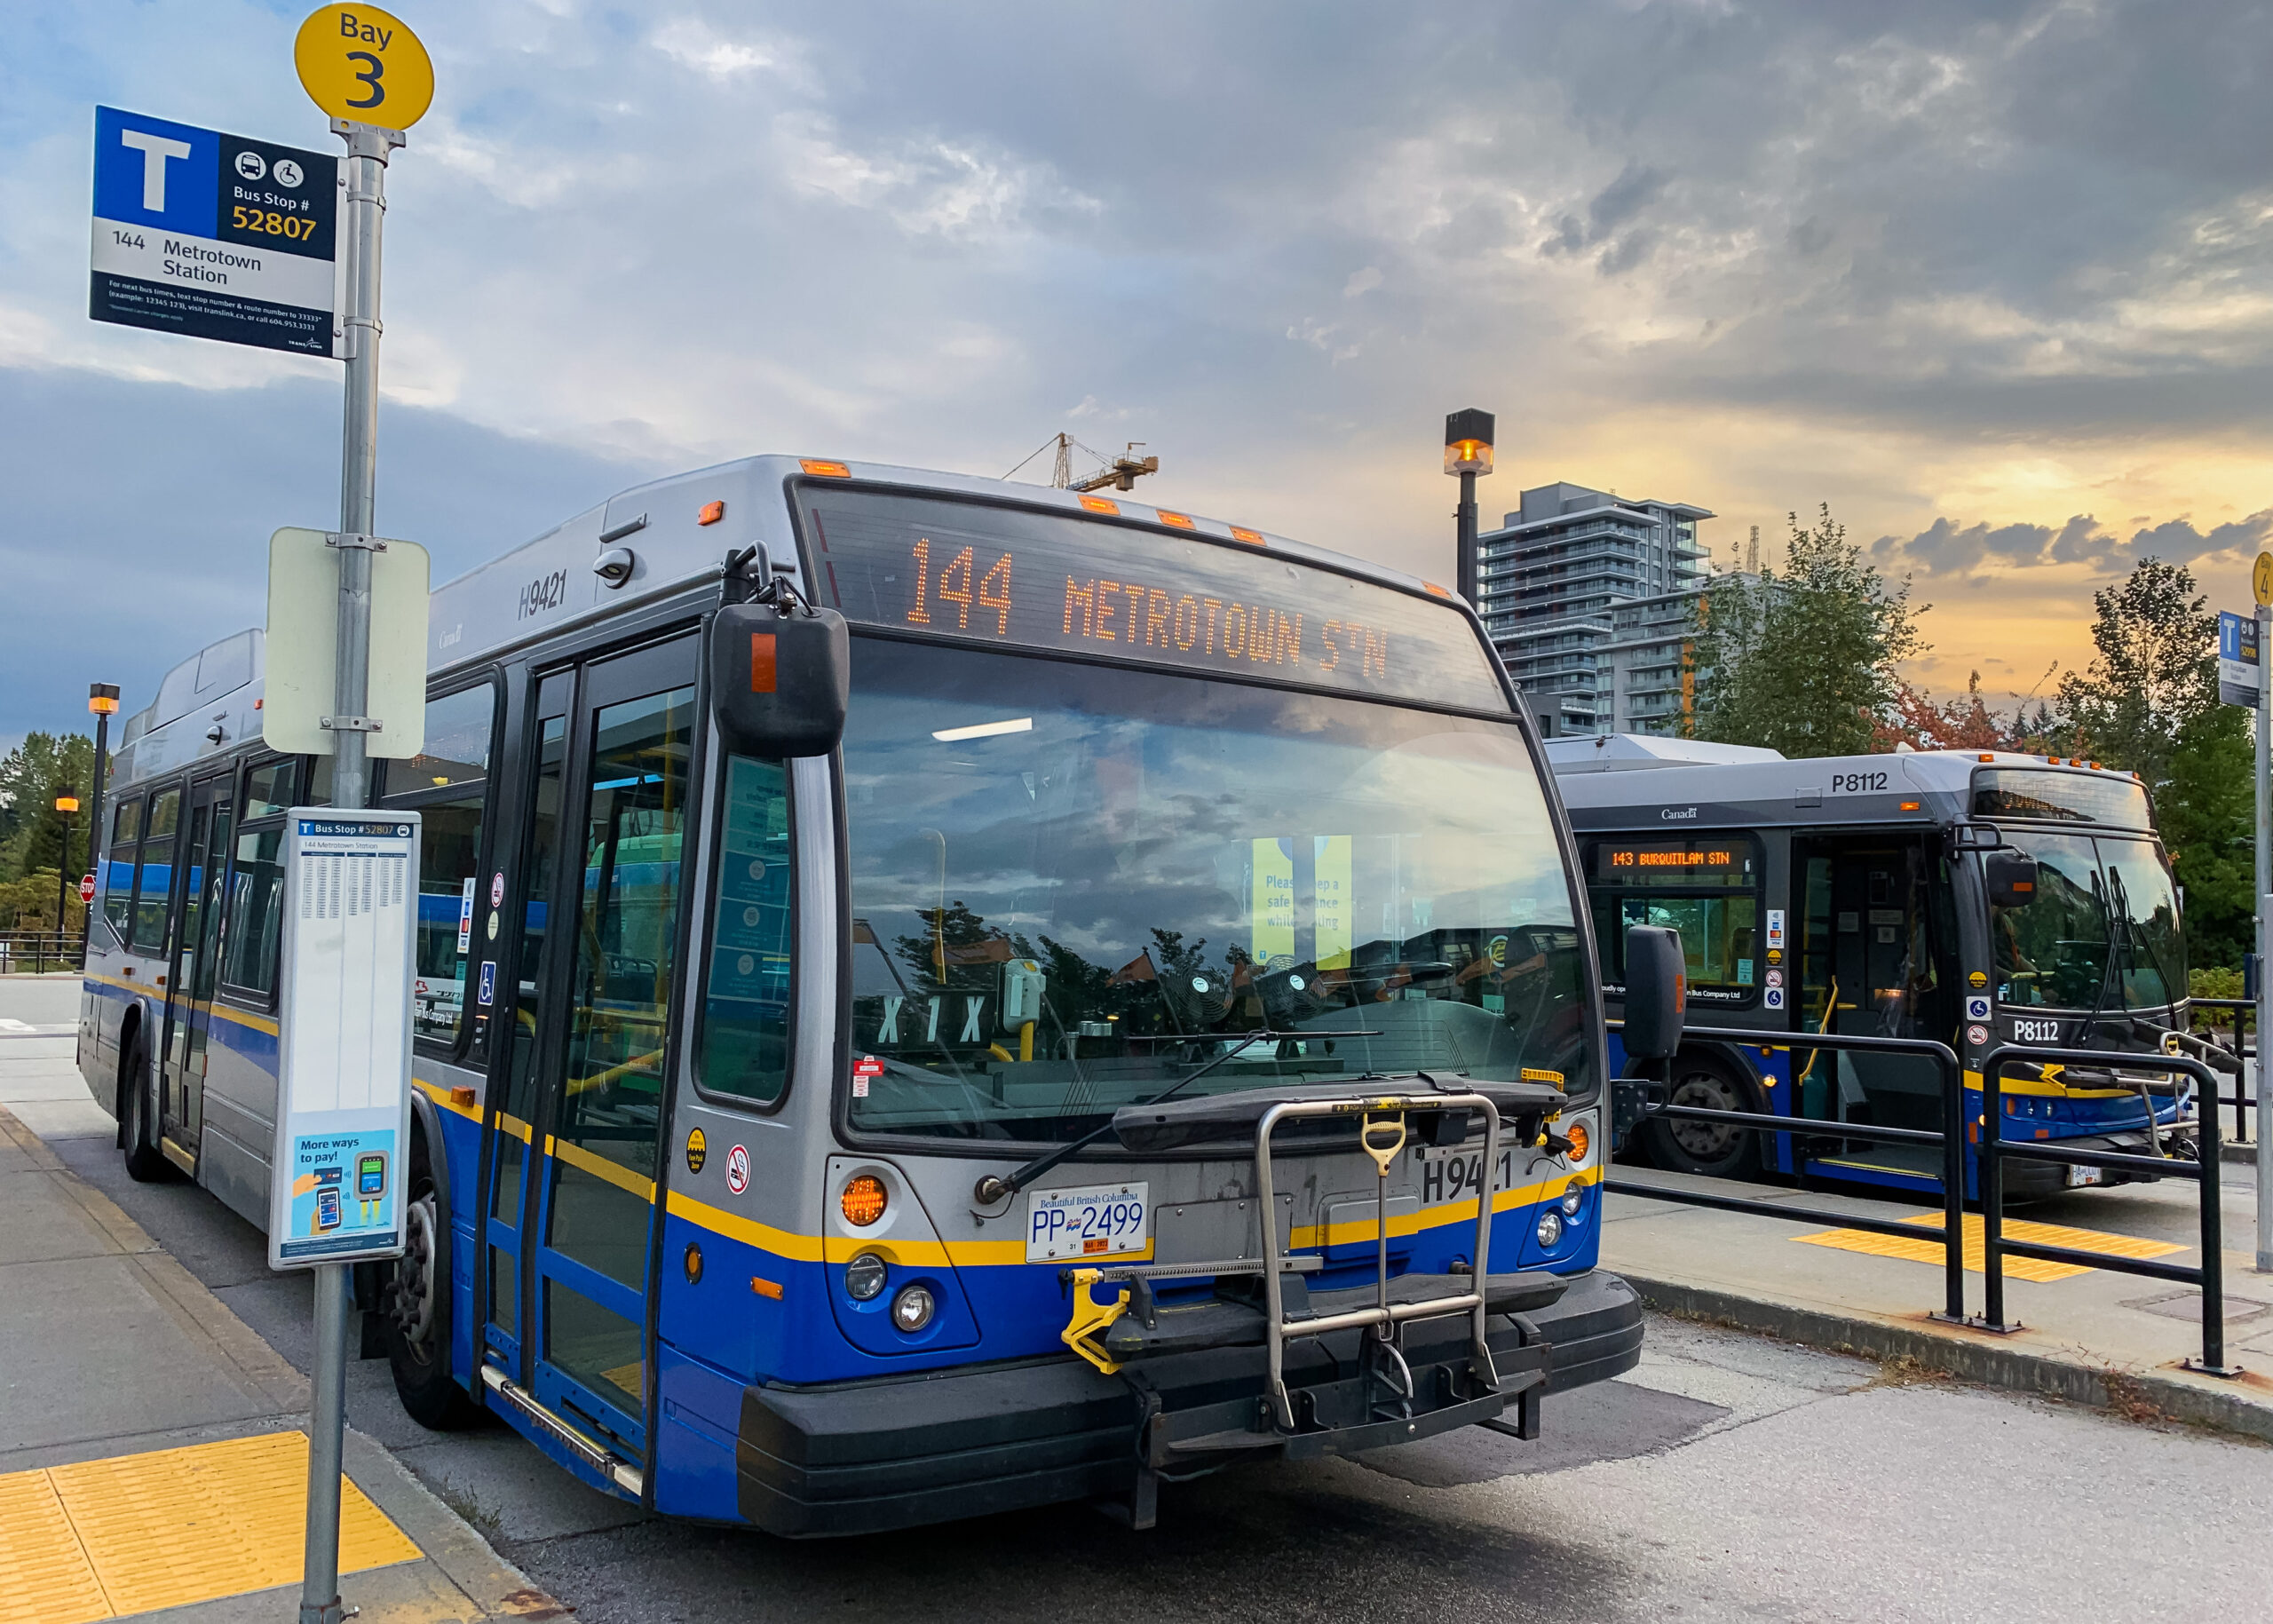 photo of the 144 metrotown to SFU bus